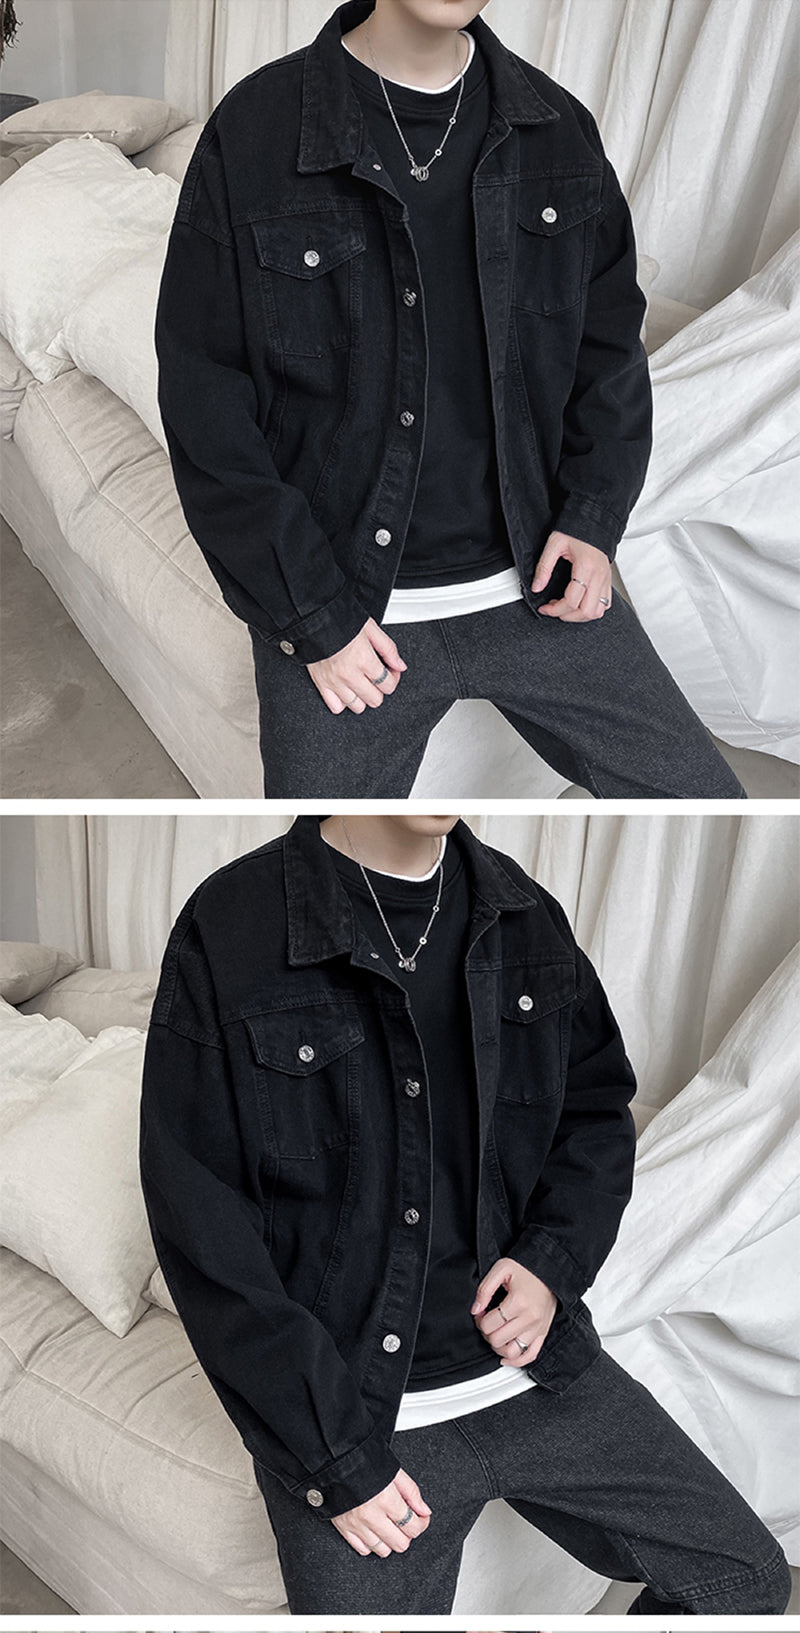 Voguable Black Denim Short Jacket Men Jeans Jacket Coats Casual Windbreaker Pockets Overalls Bomber Streetwear Man Clothing Outwear voguable